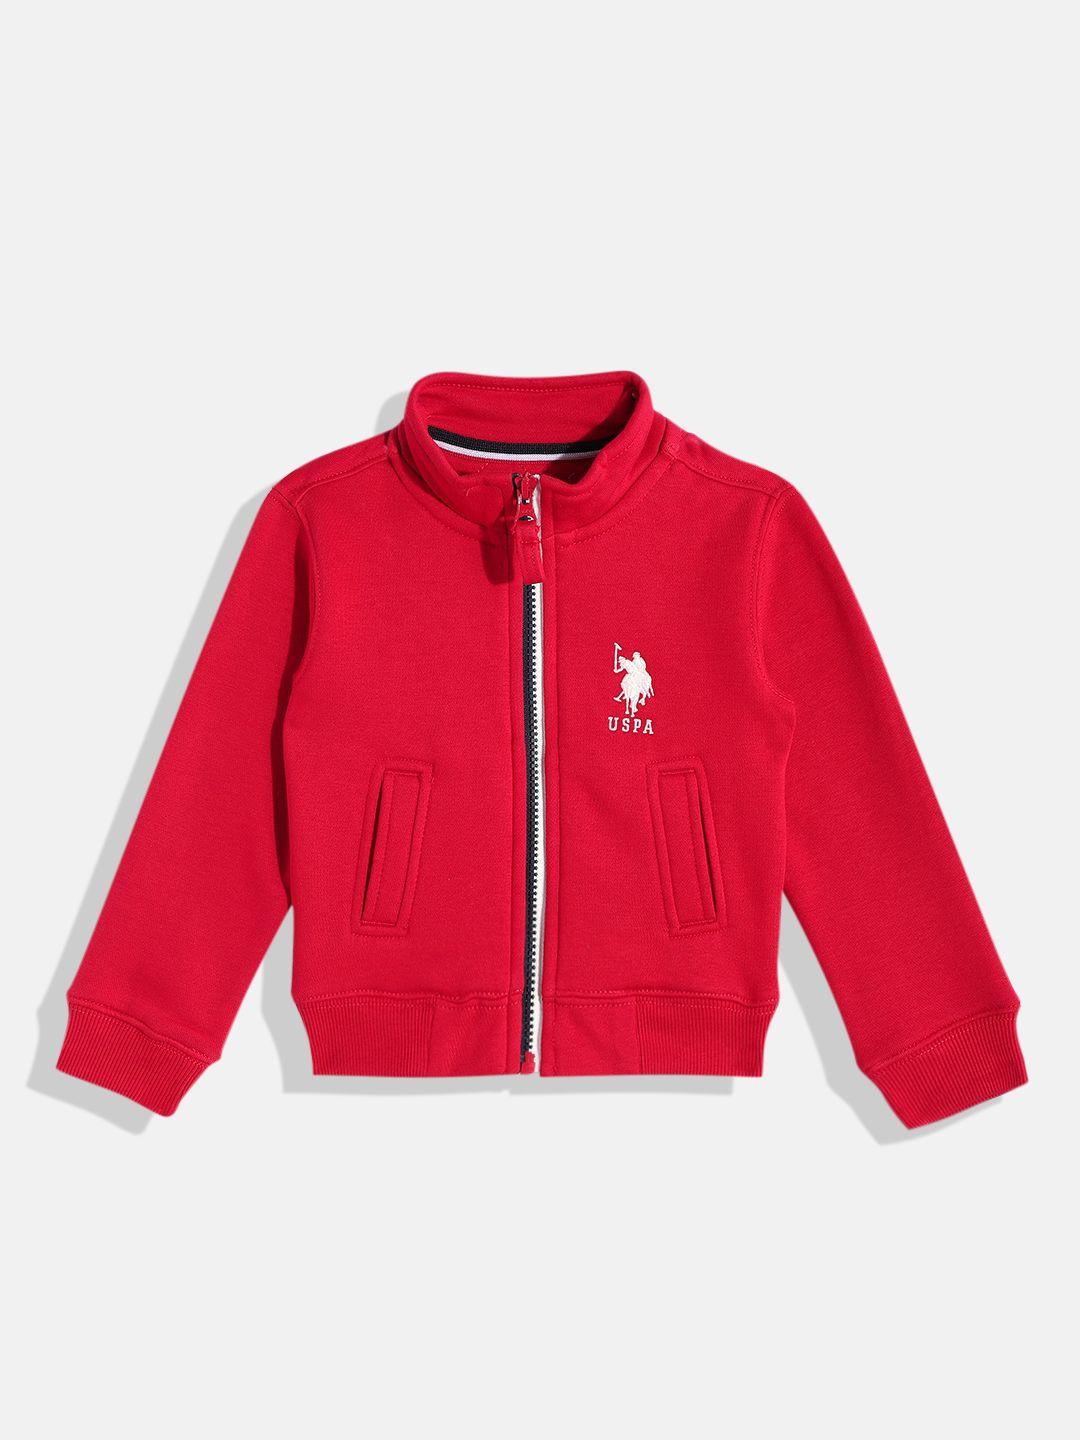 u.s. polo assn. kids boys red alphanumeric back embroidered sweatshirt